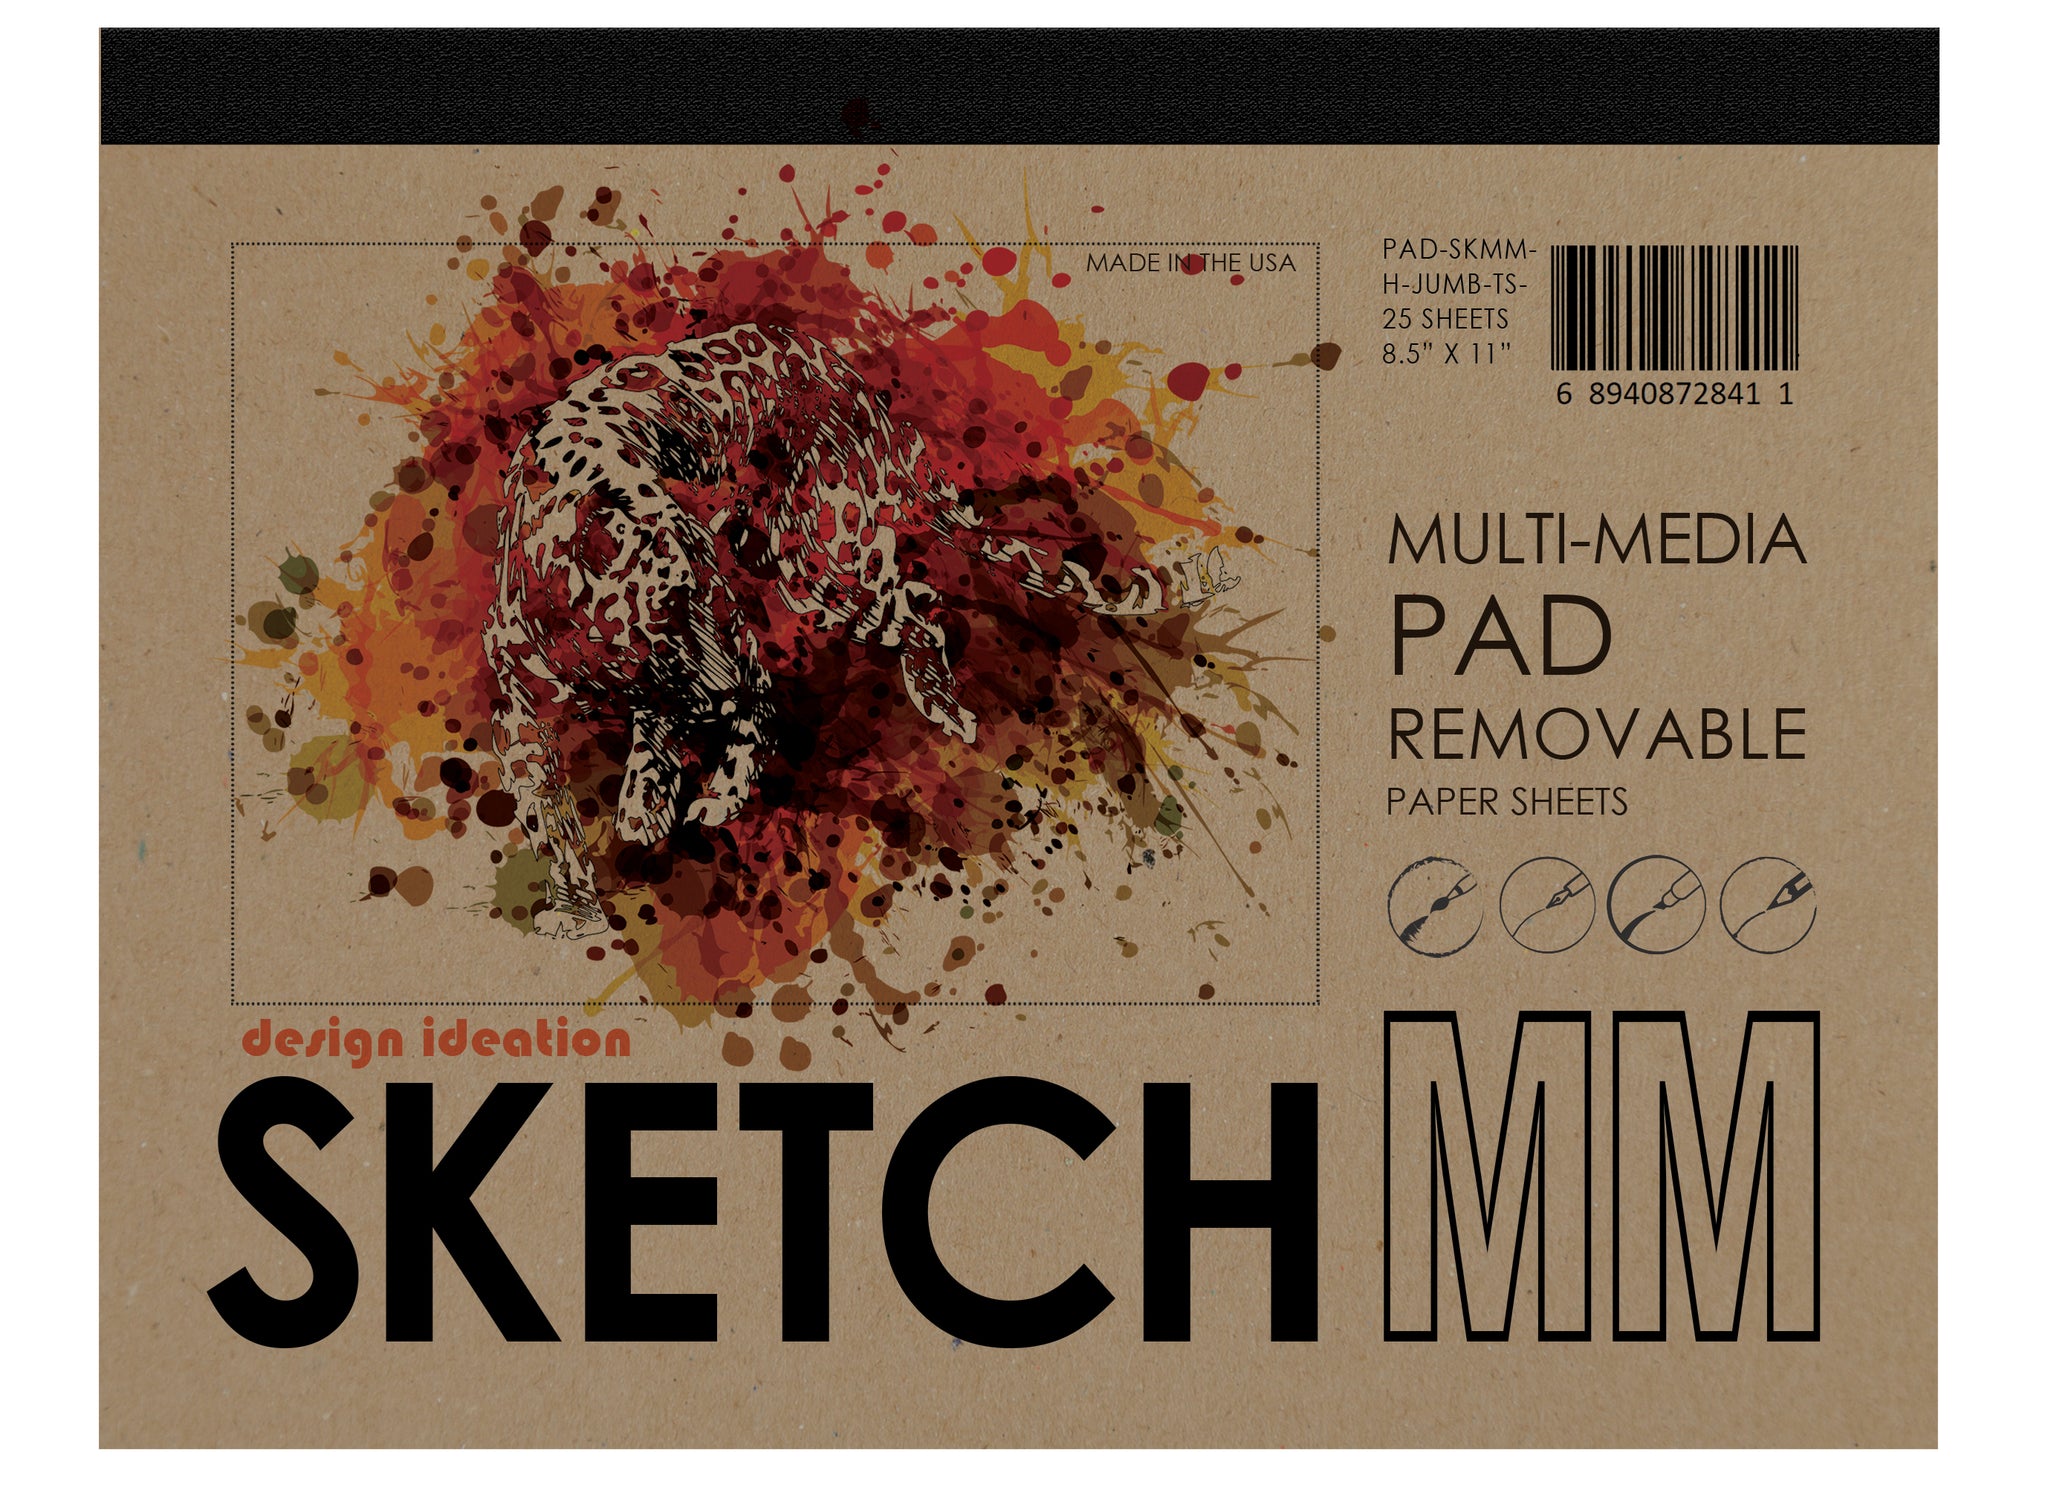 QUICK DRAW Drawing Book : Multi-media Paper Book. (6 x 12) – Design  Ideation Studio